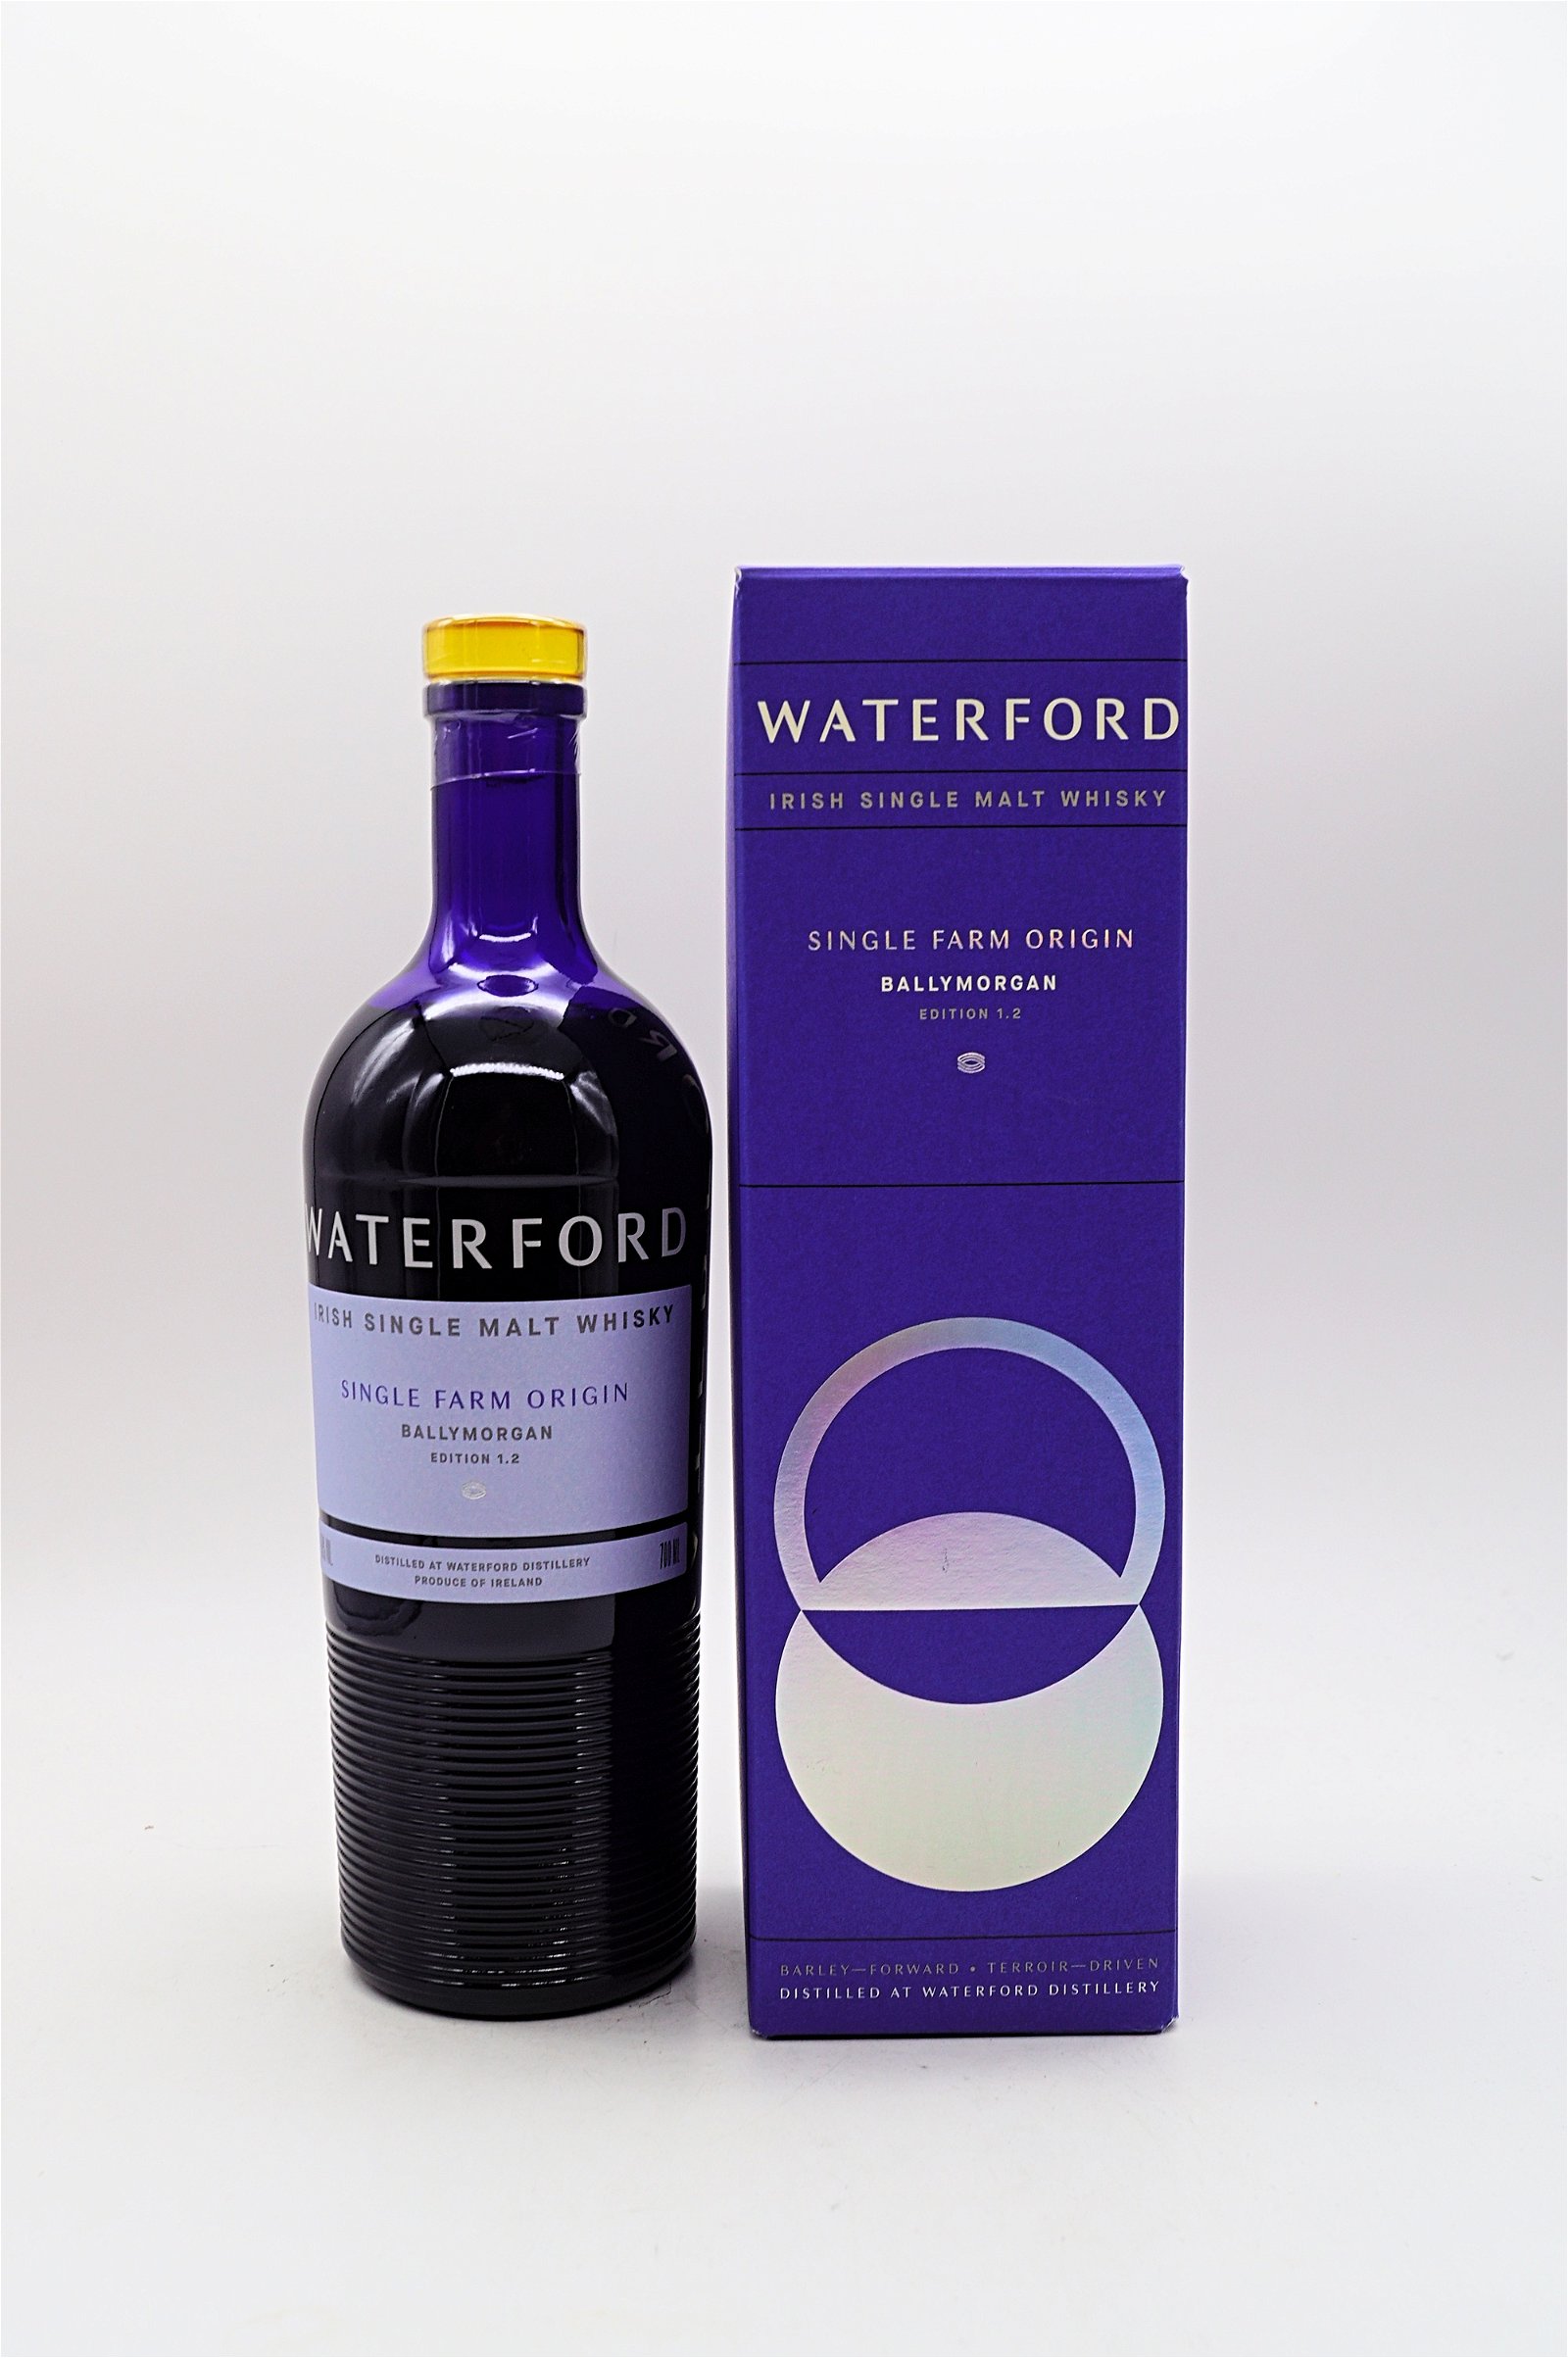 Waterford Ballymorgan Edition 1.2 Single Farm Origins Irish Single Malt Whisky